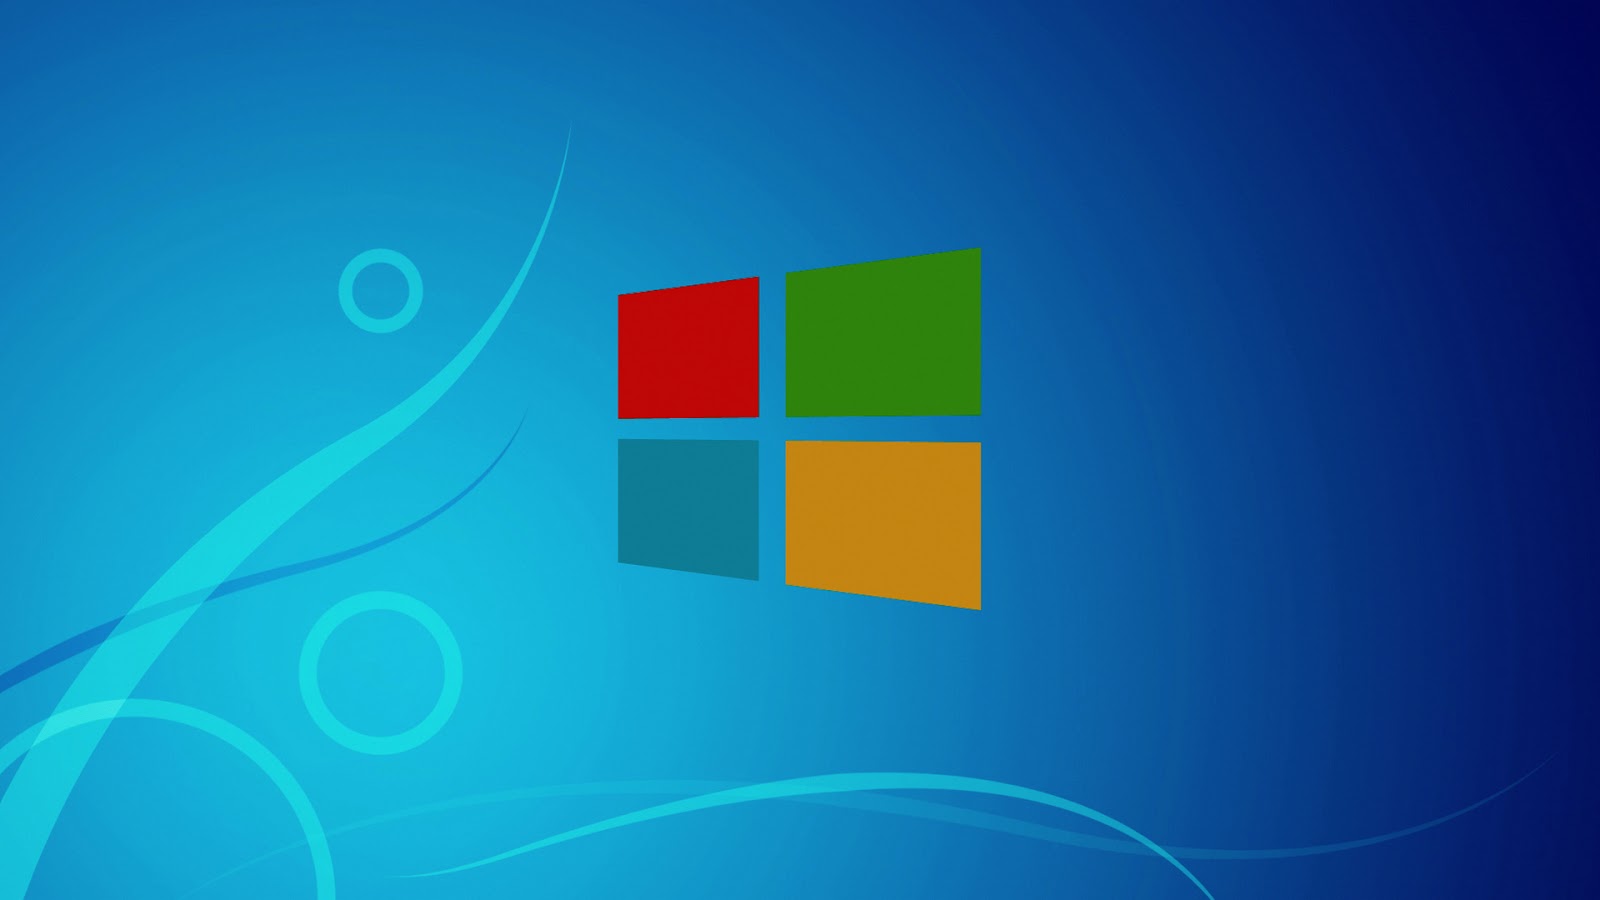 windows 8.1 desktops